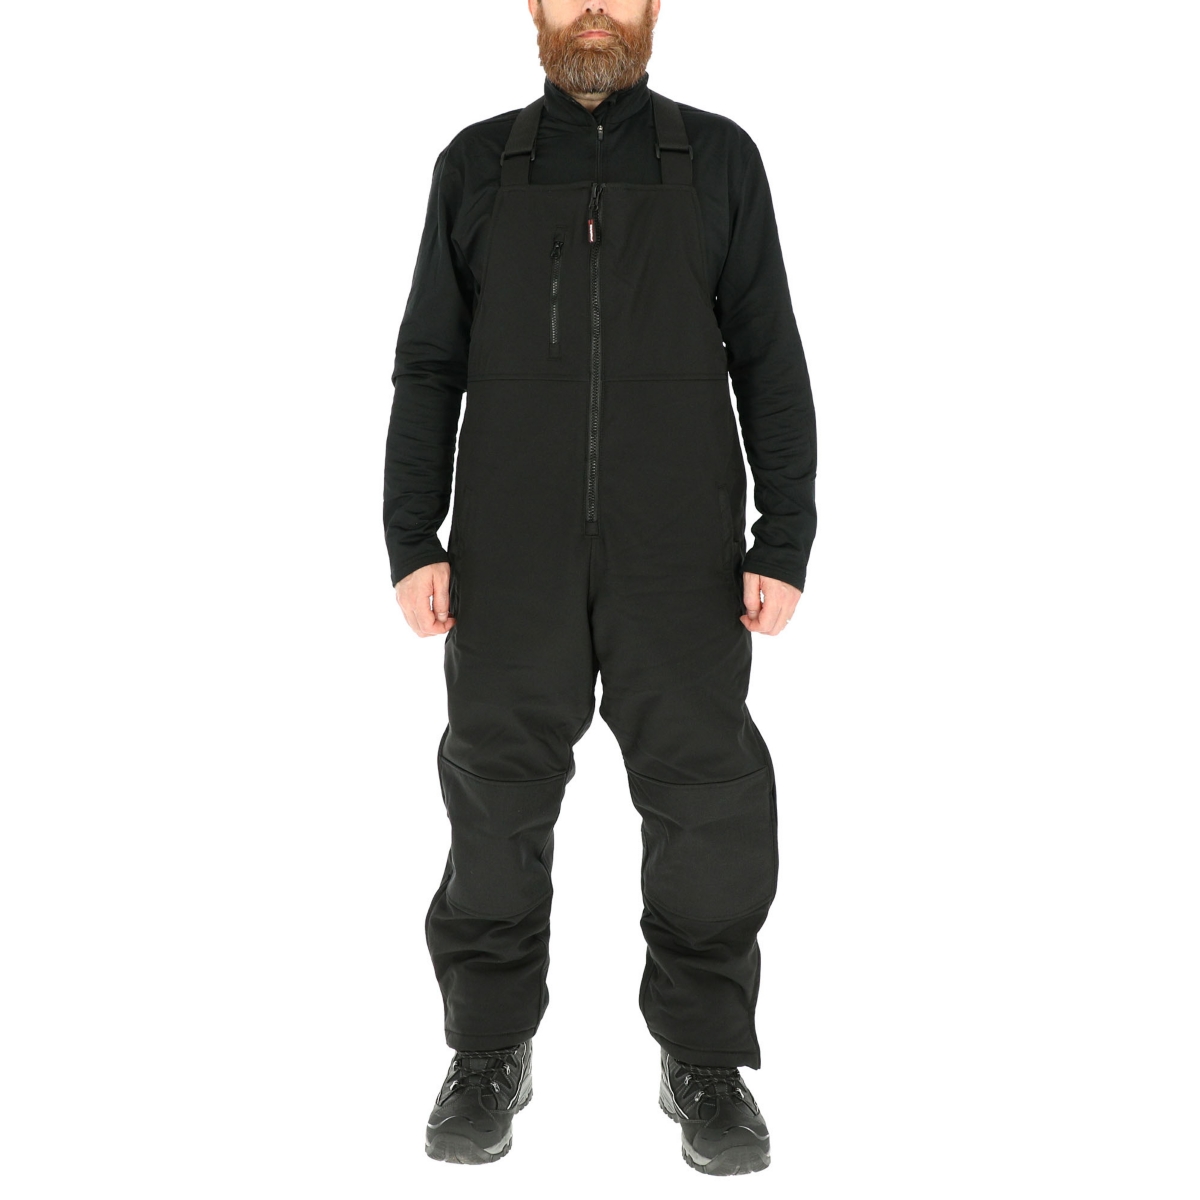 Men's Warm Insulated Softshell High Bib Overalls - Black